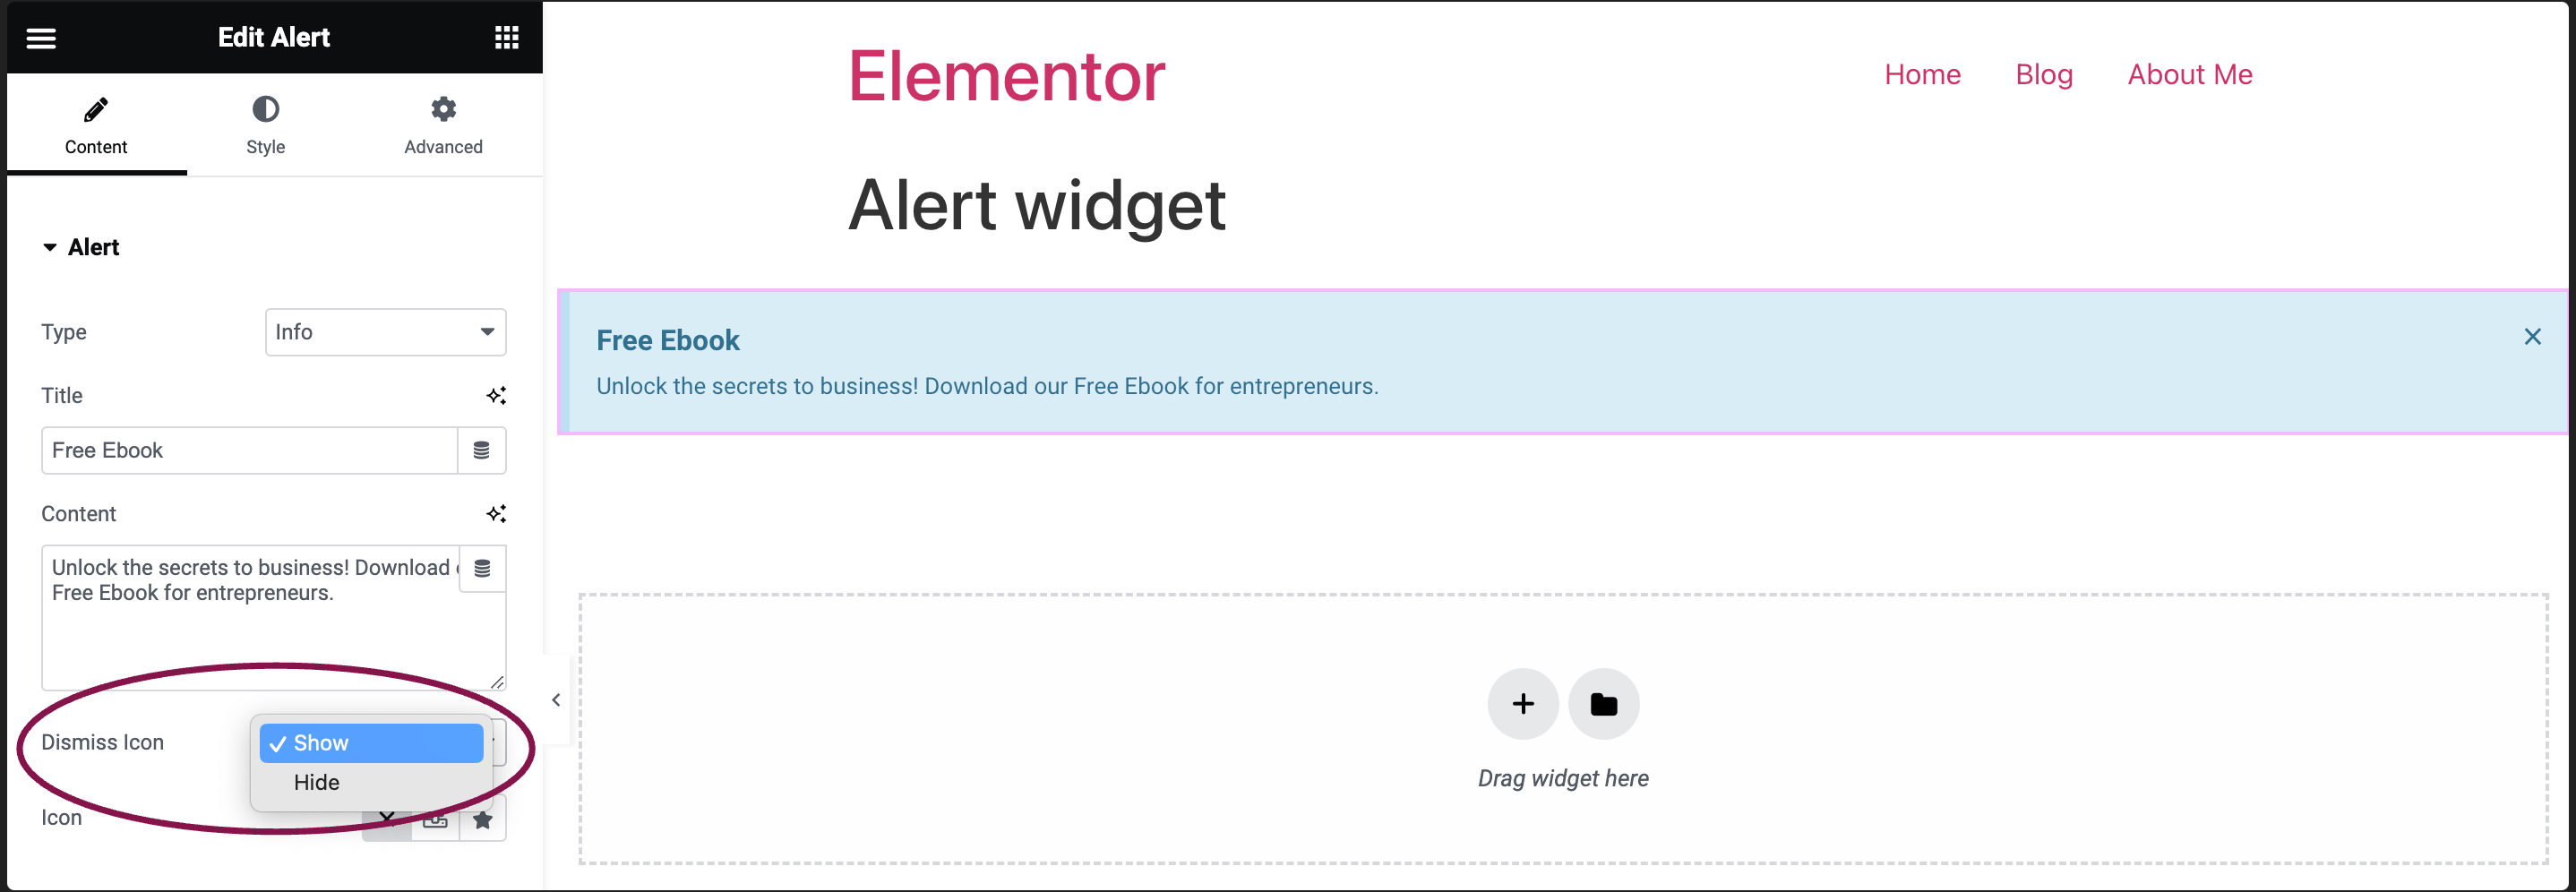 dismiss icon Alert widget 13